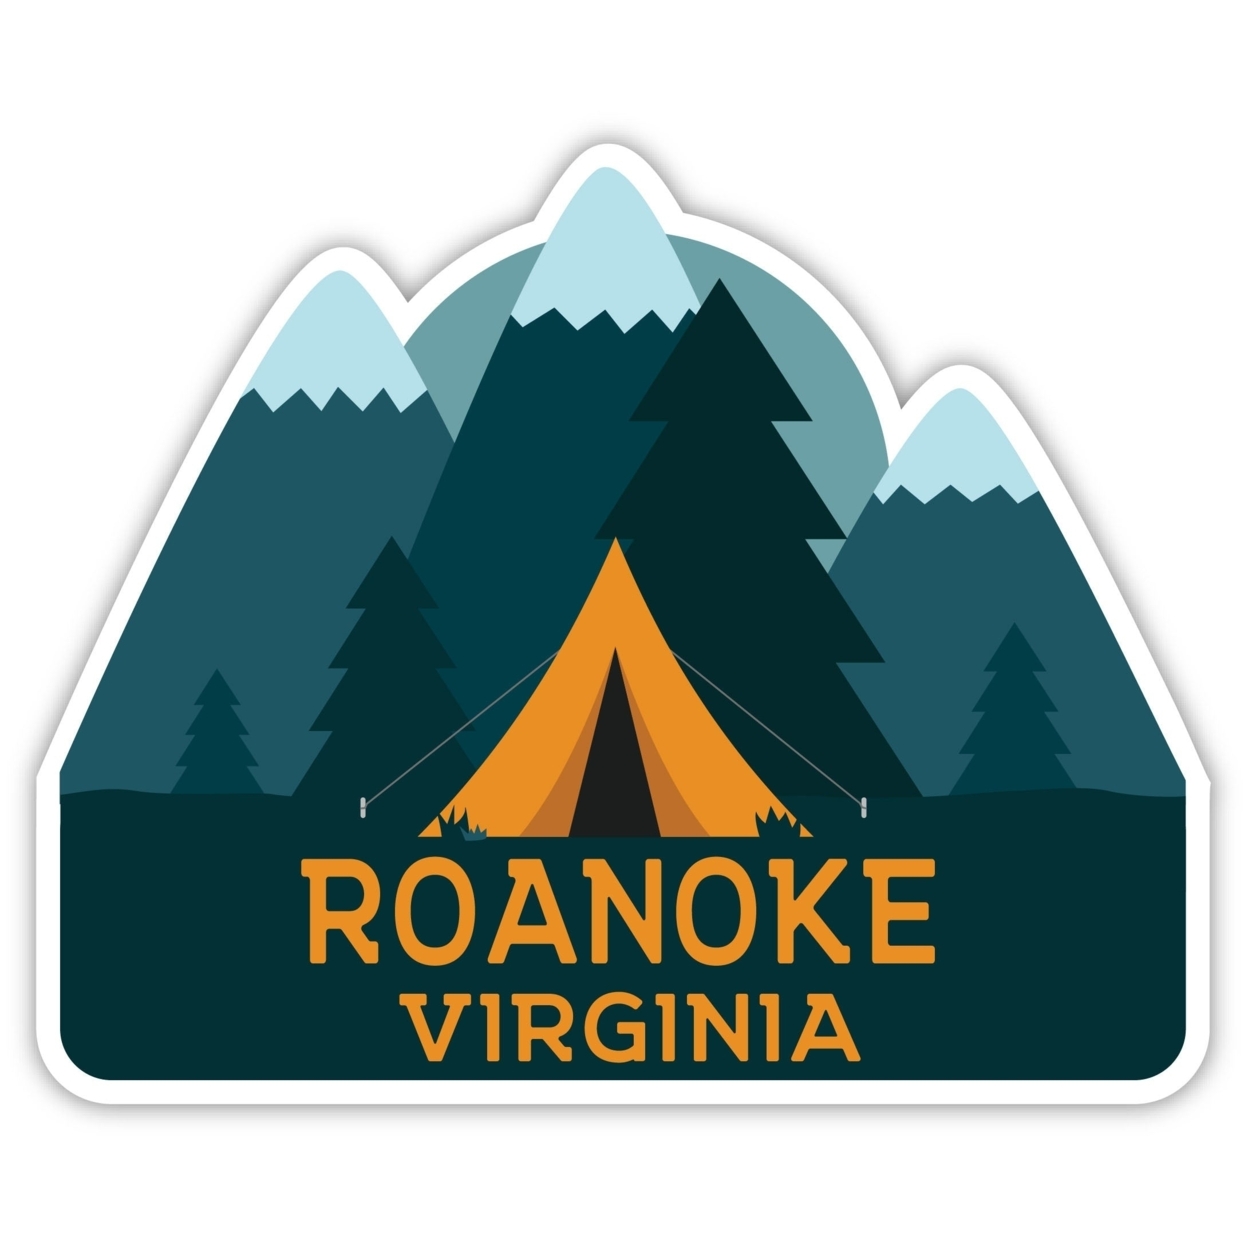 Roanoke Virginia Souvenir Decorative Stickers (Choose Theme And Size) - Single Unit, 2-Inch, Adventures Awaits